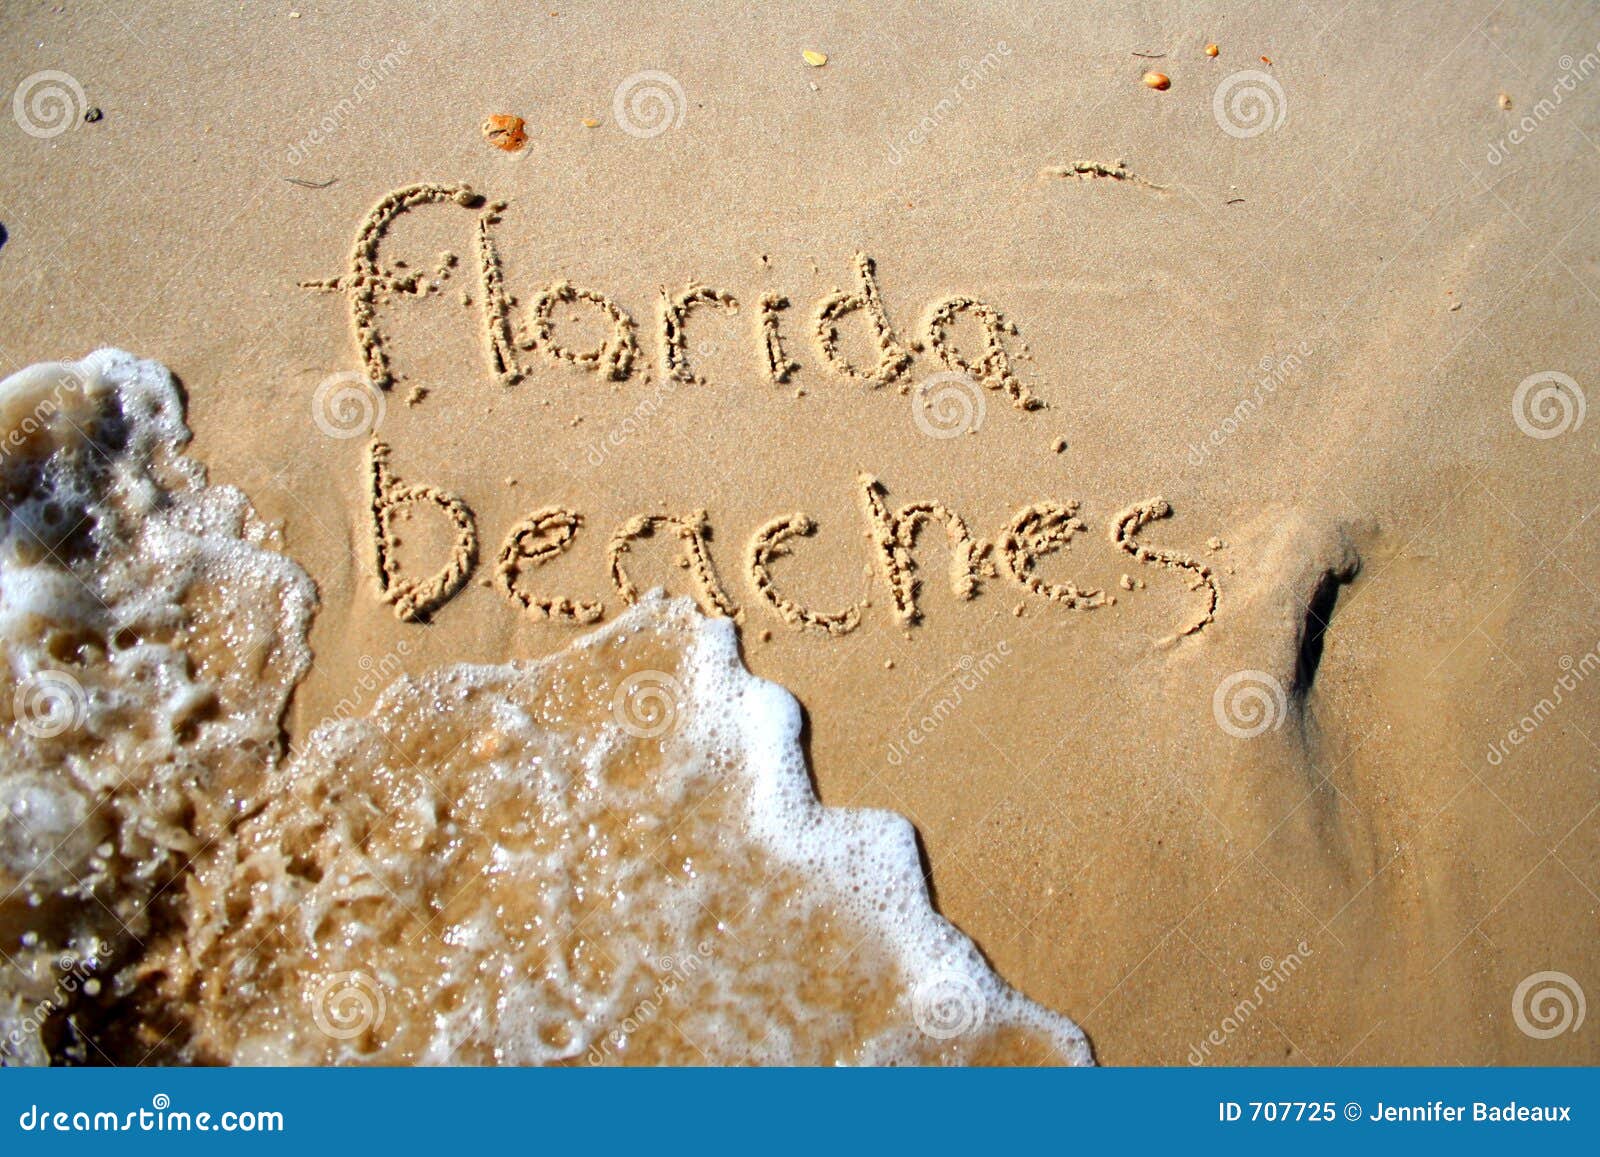 florida beaches